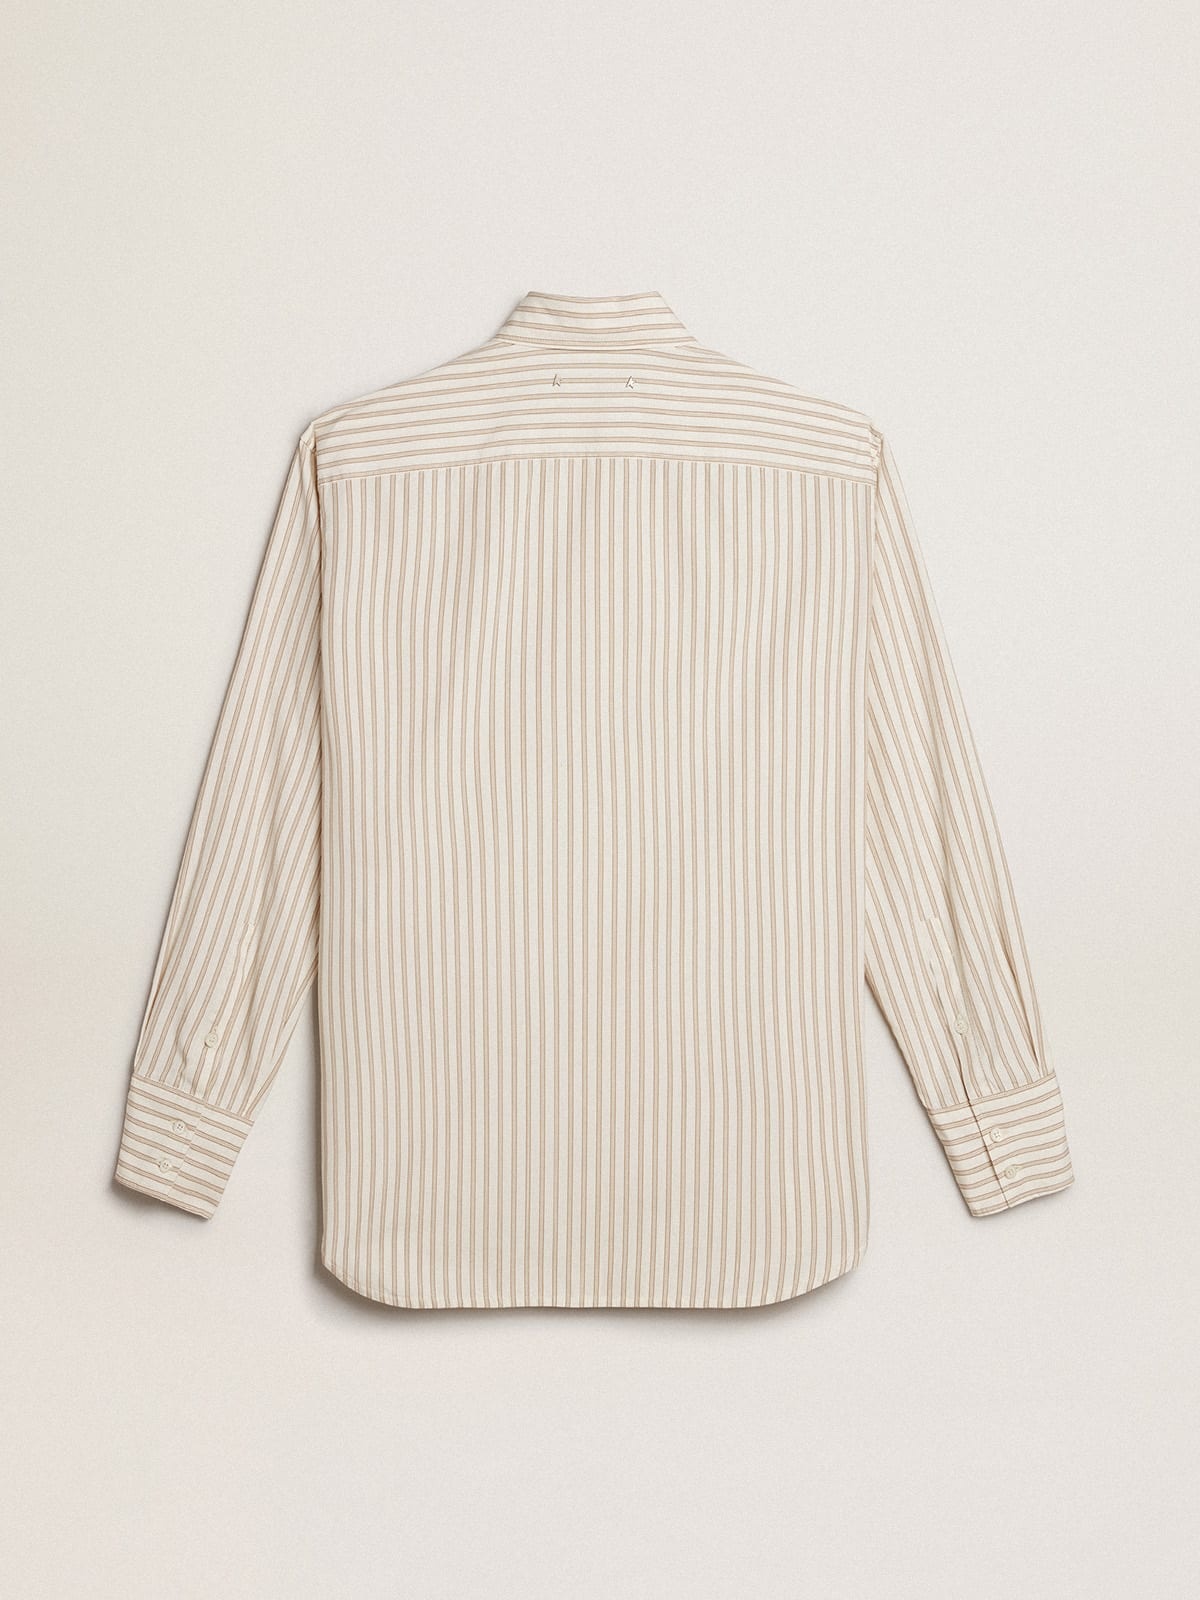 Women’s white cotton shirt with beige stripes - 5